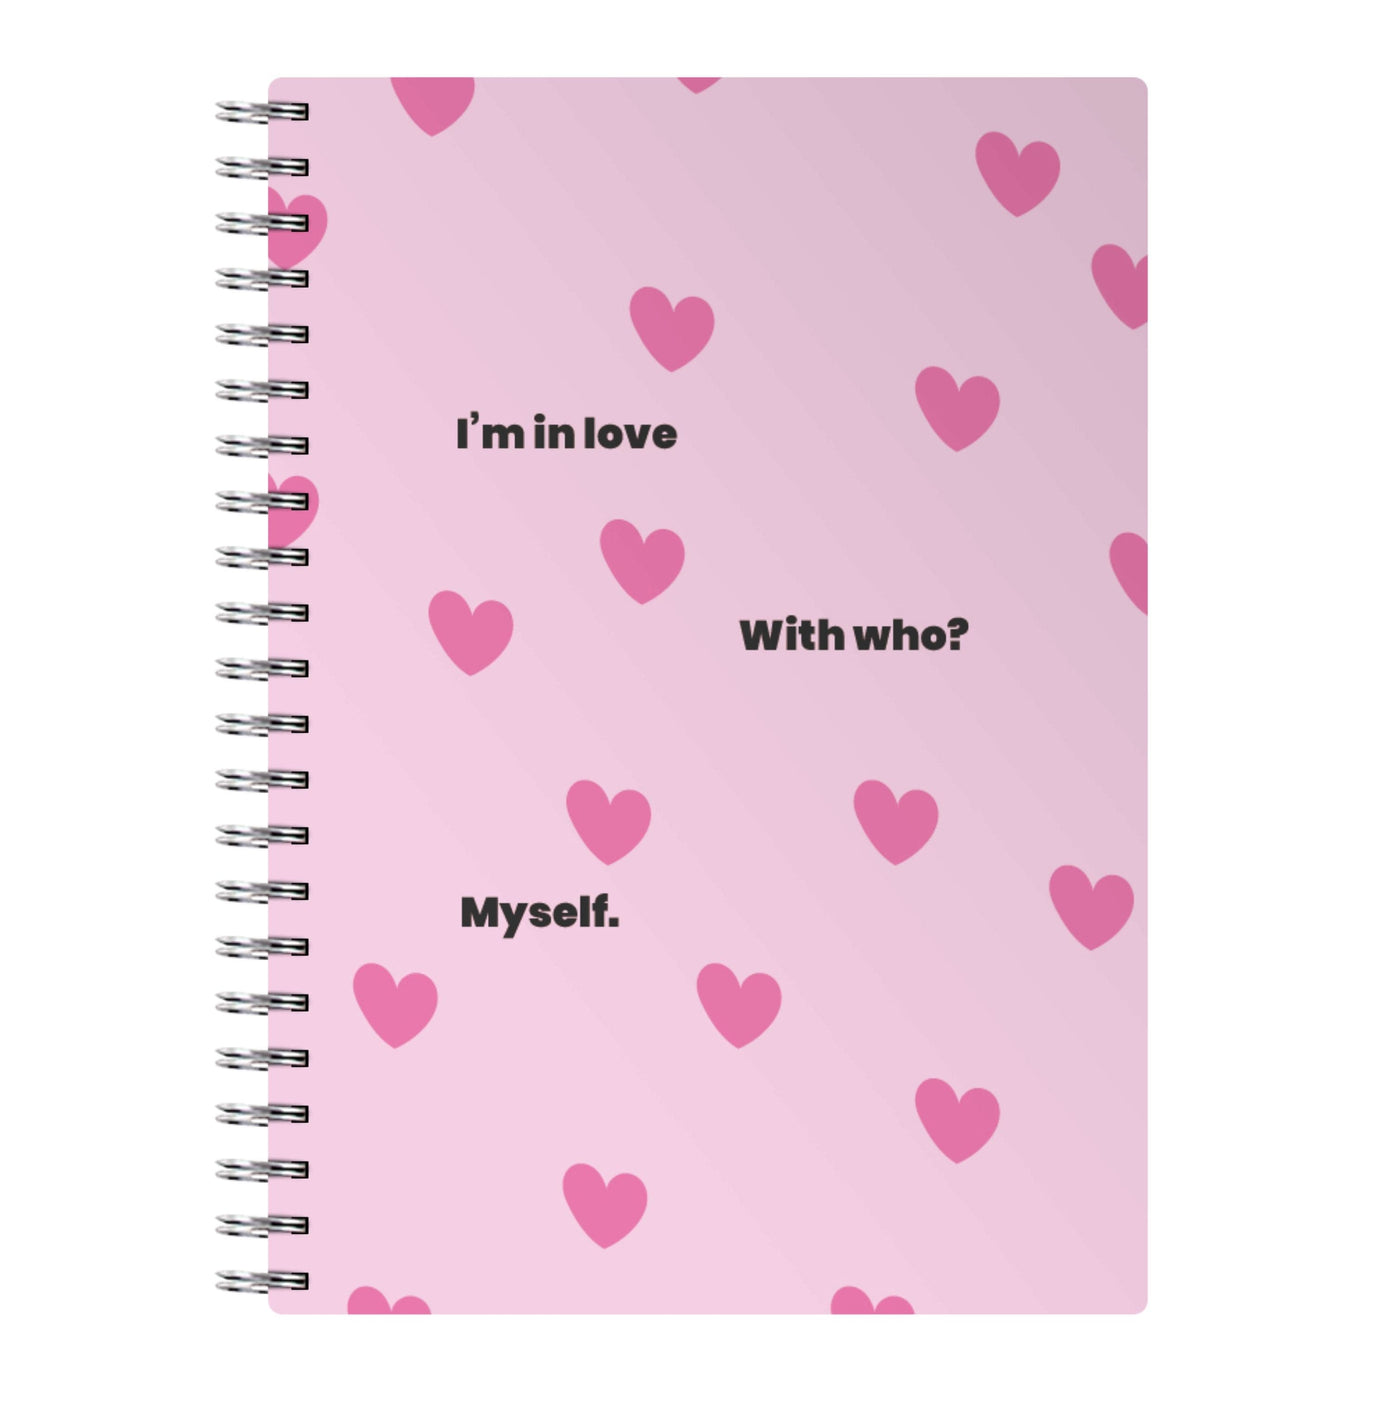 Im in love - Kourtney Kardashian Notebook